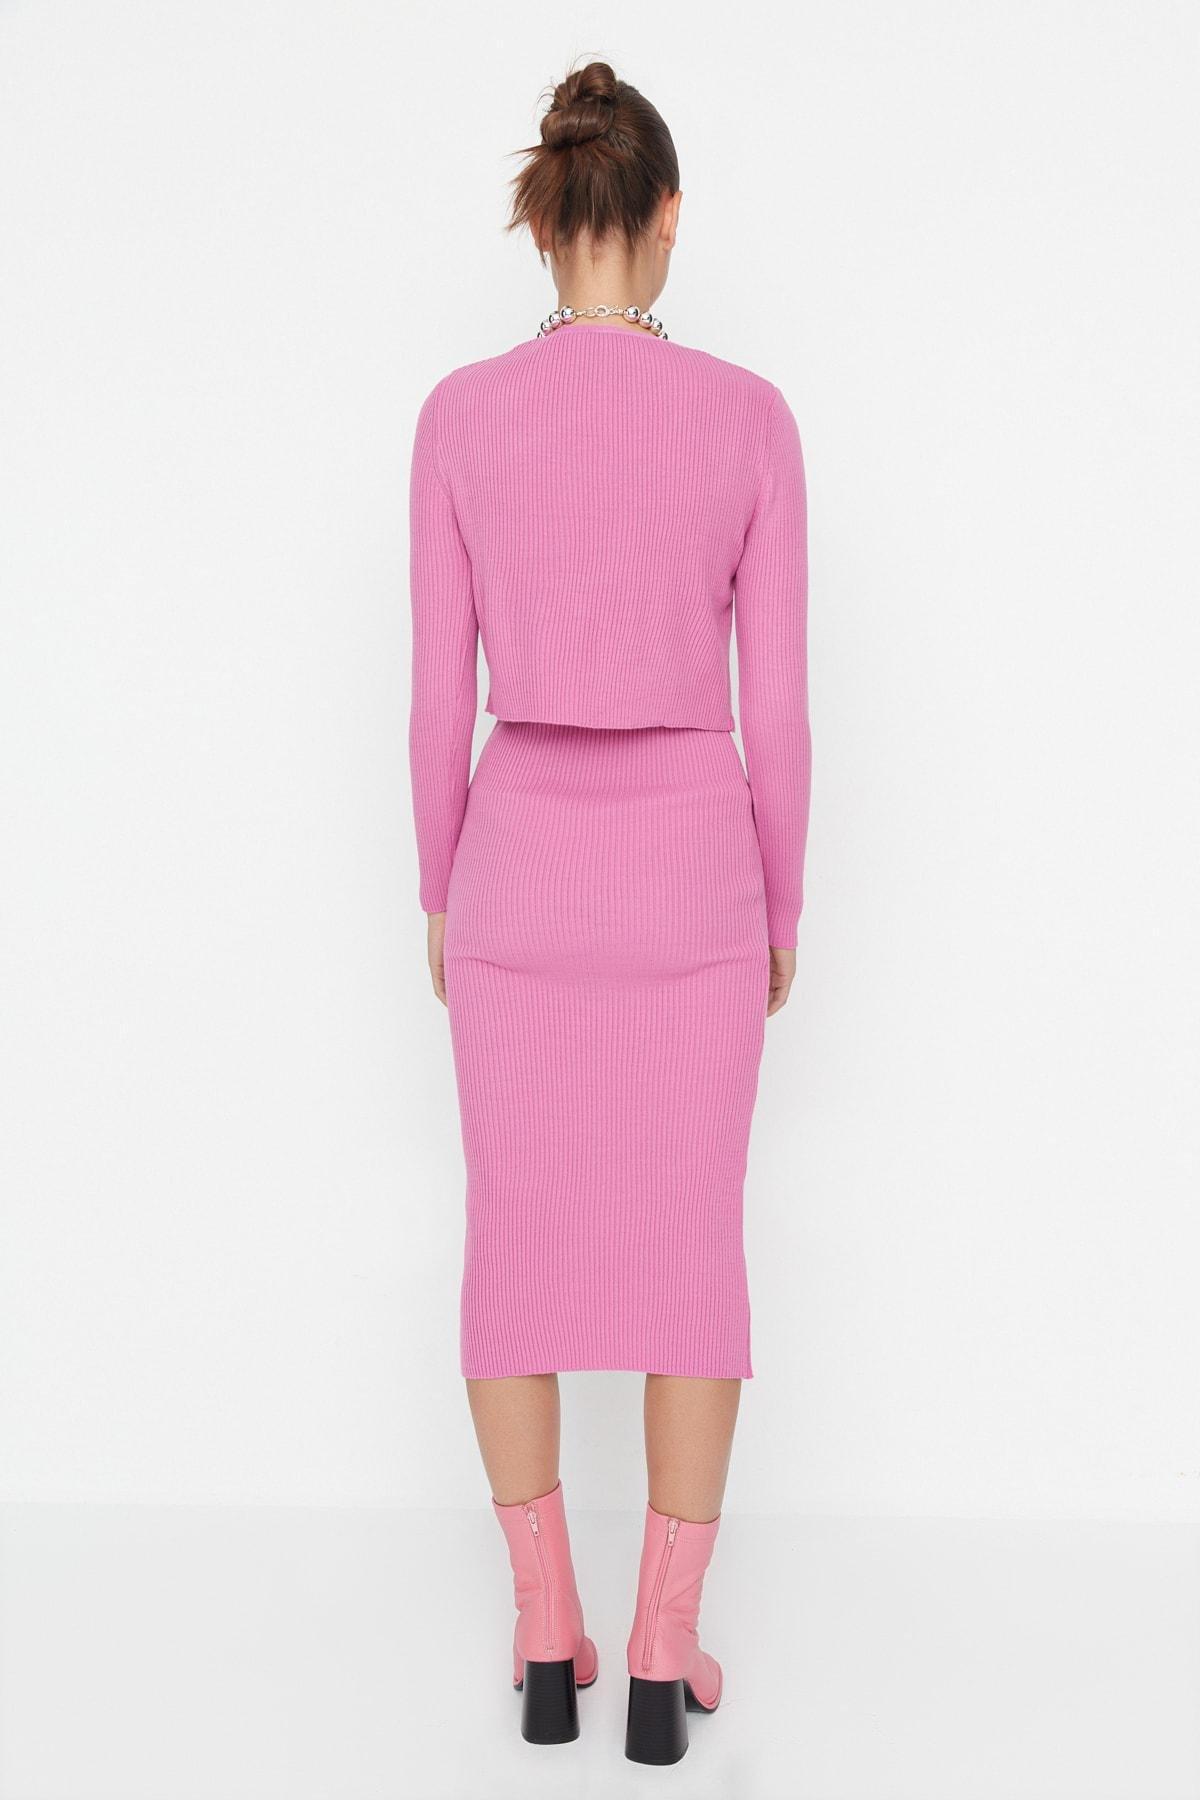 Trendyol - Pink Bodycon Midi Dress